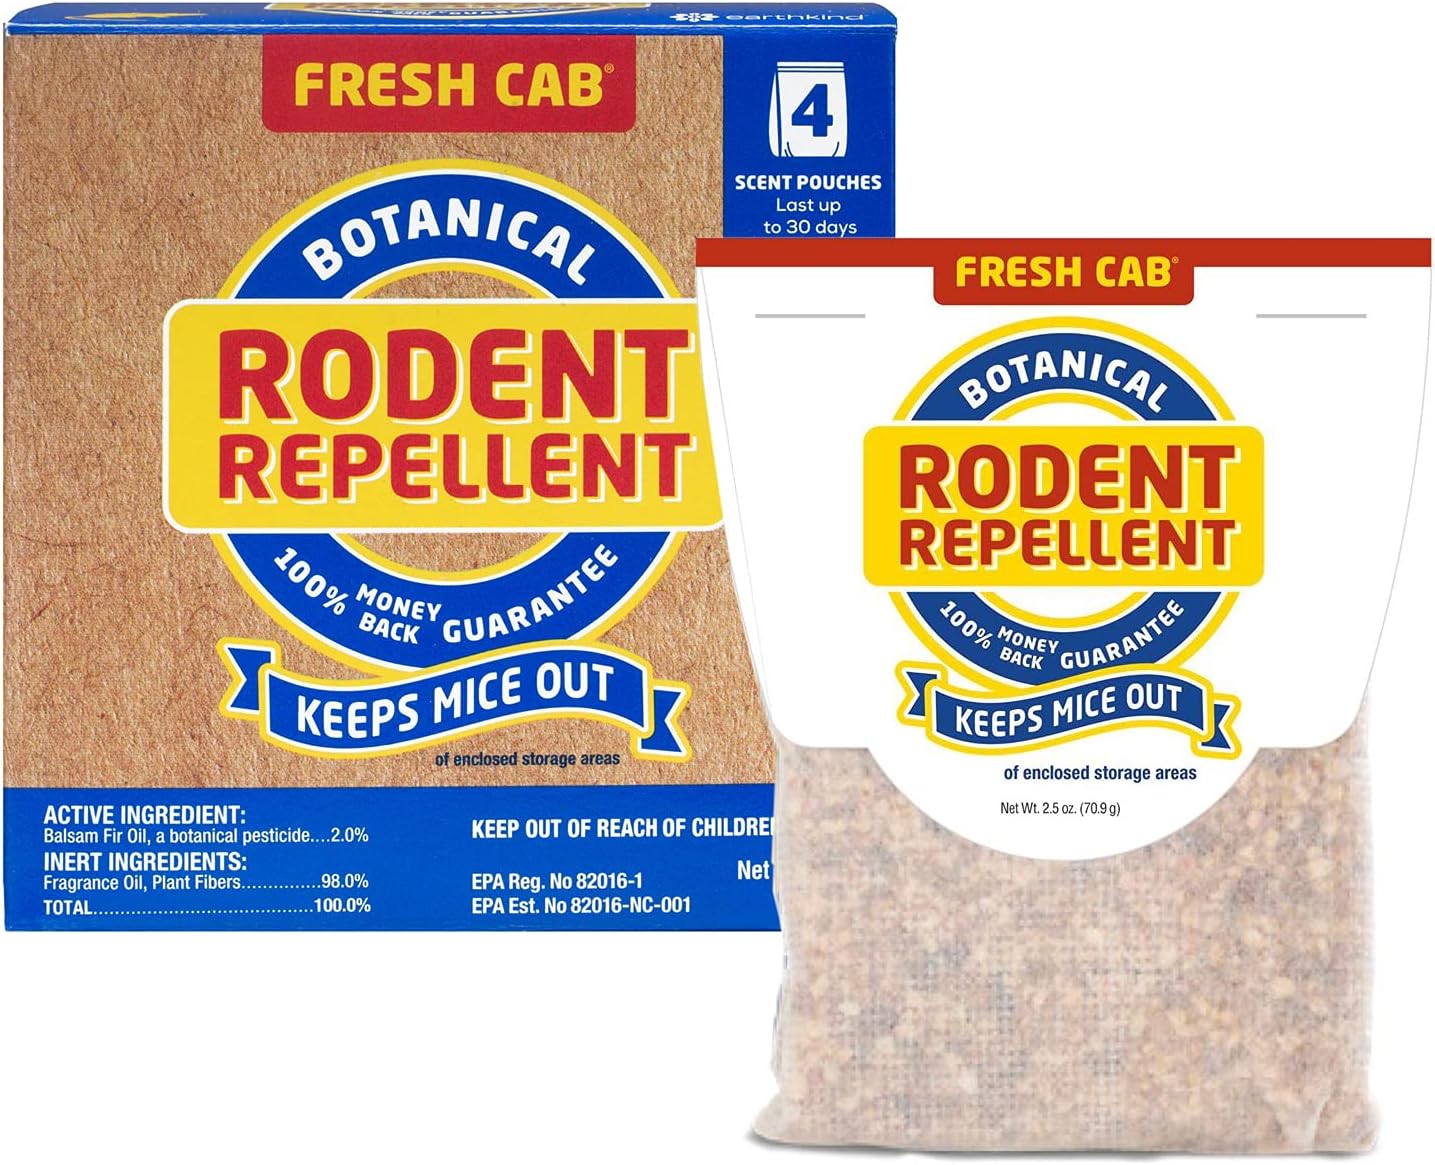 Fresh Cab Botanical Rodent Repellent - Environmentally [...]